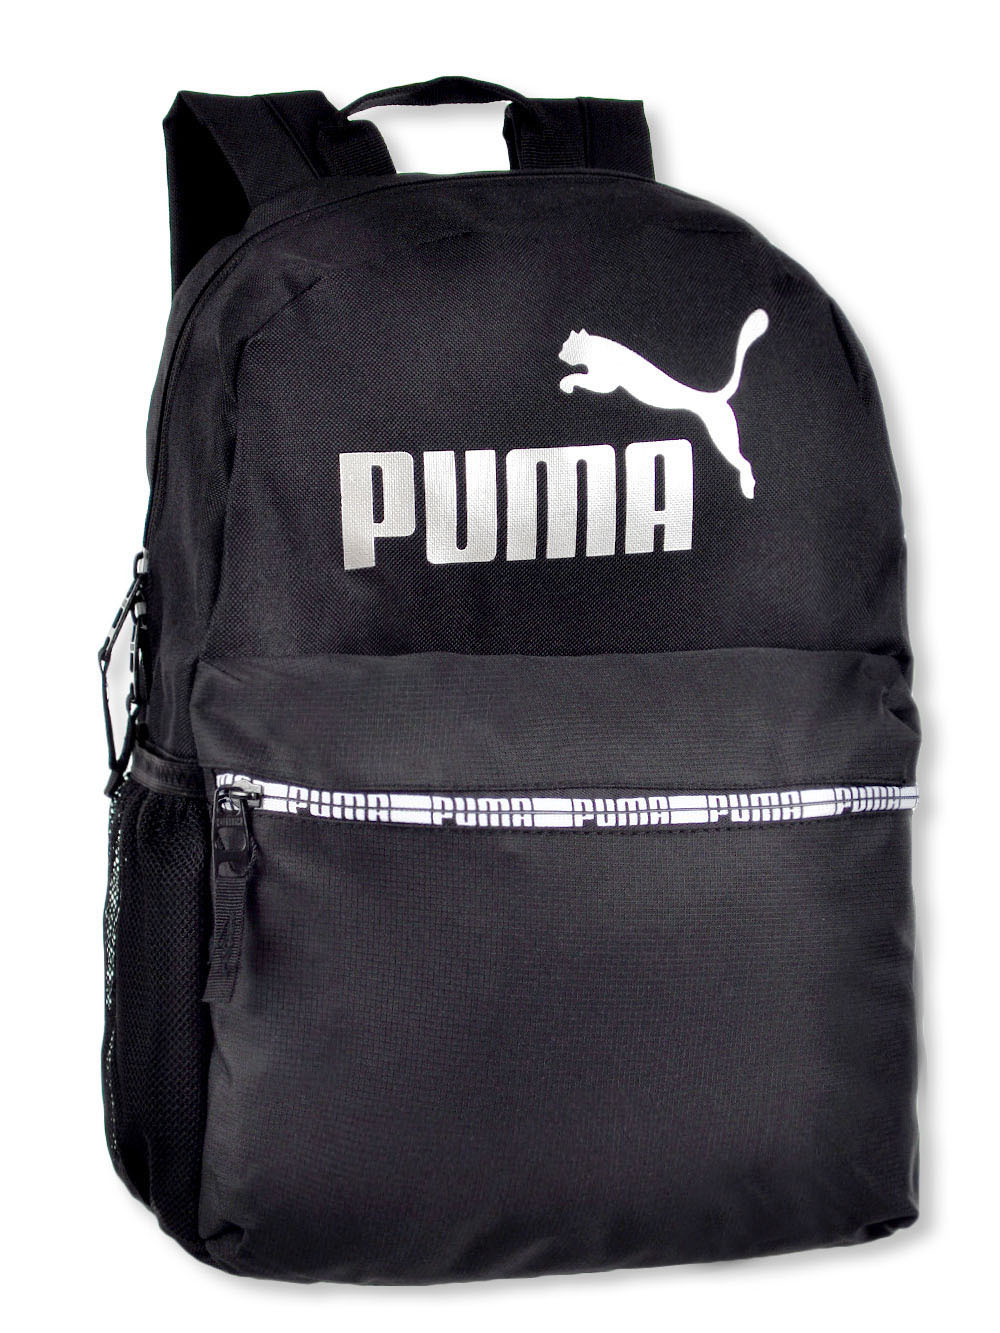 puma navy blue backpack